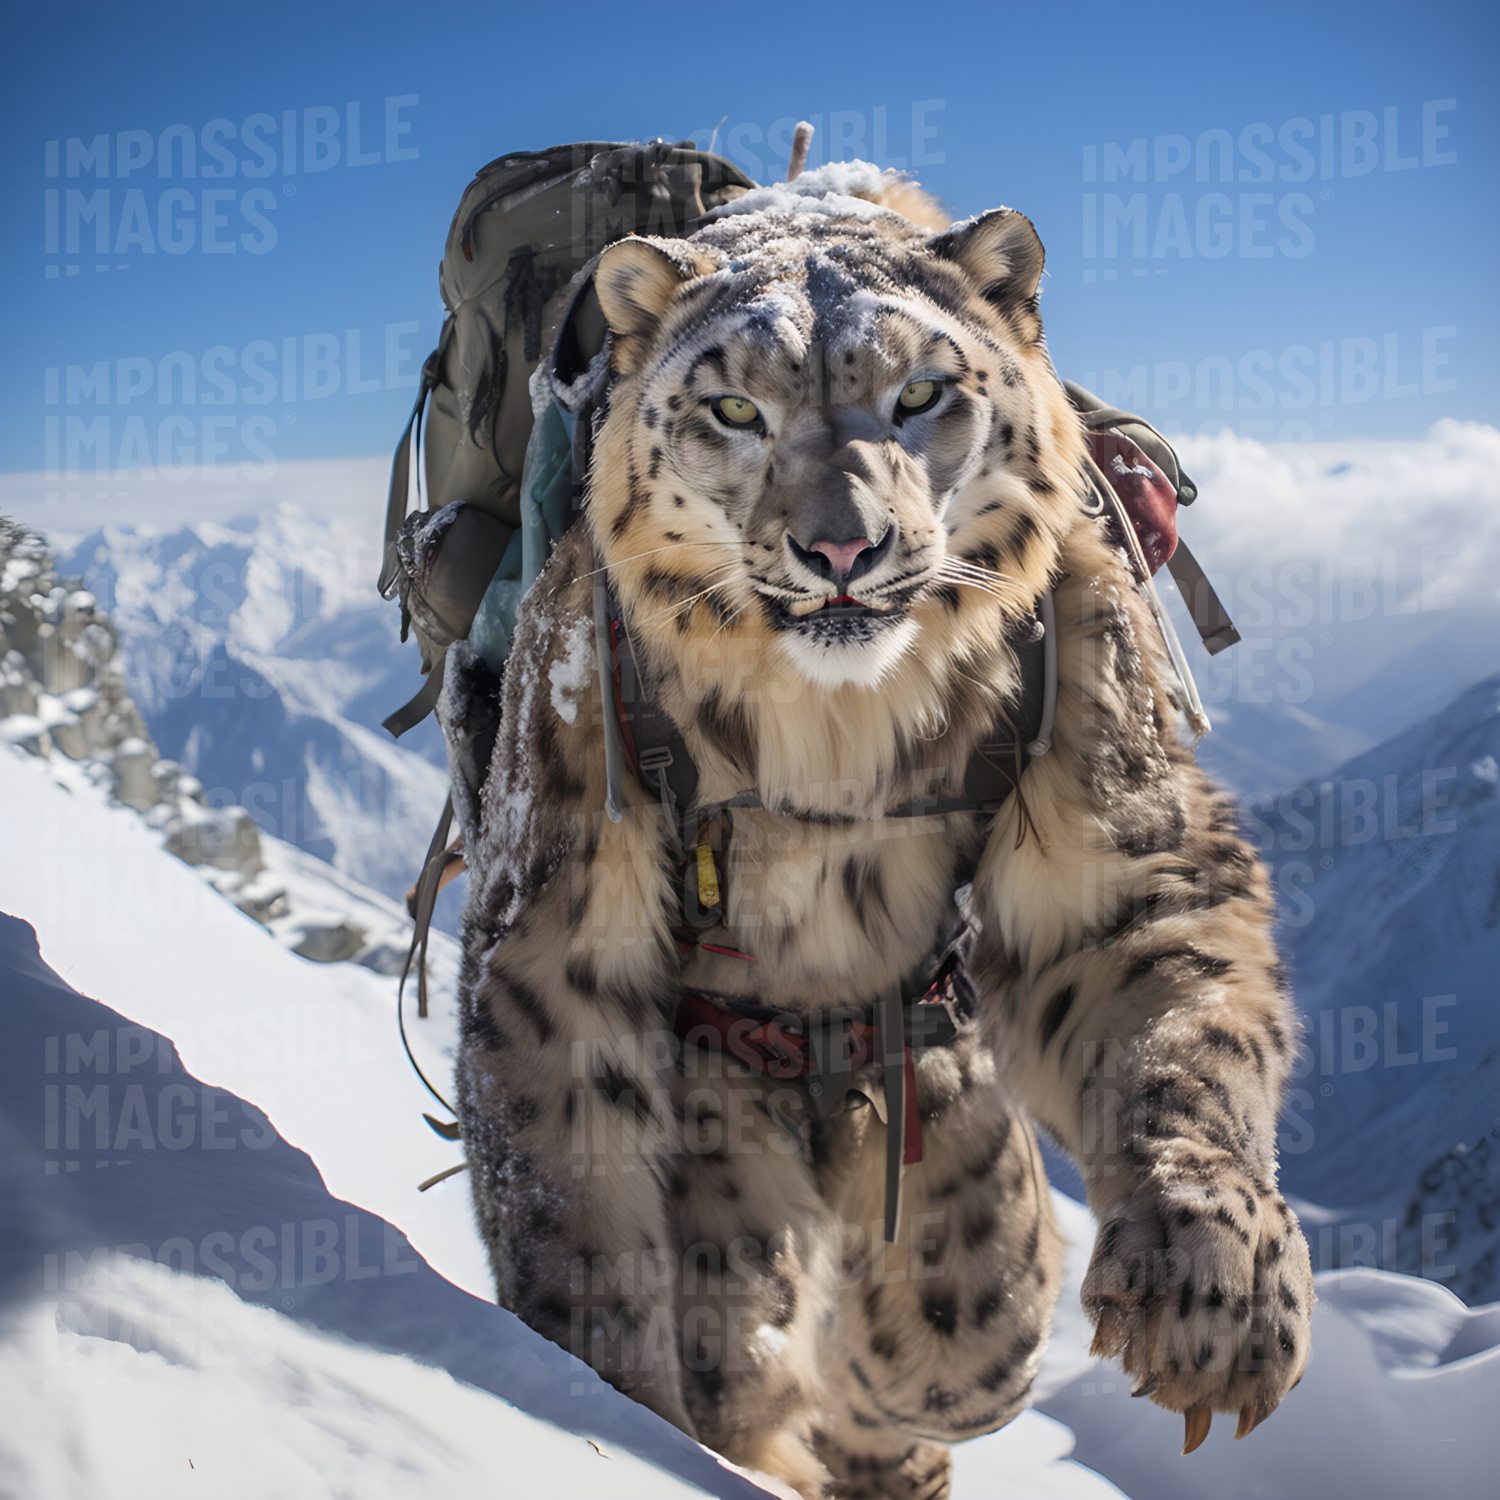 Anthopormorphic snow leopard exploring the mountains